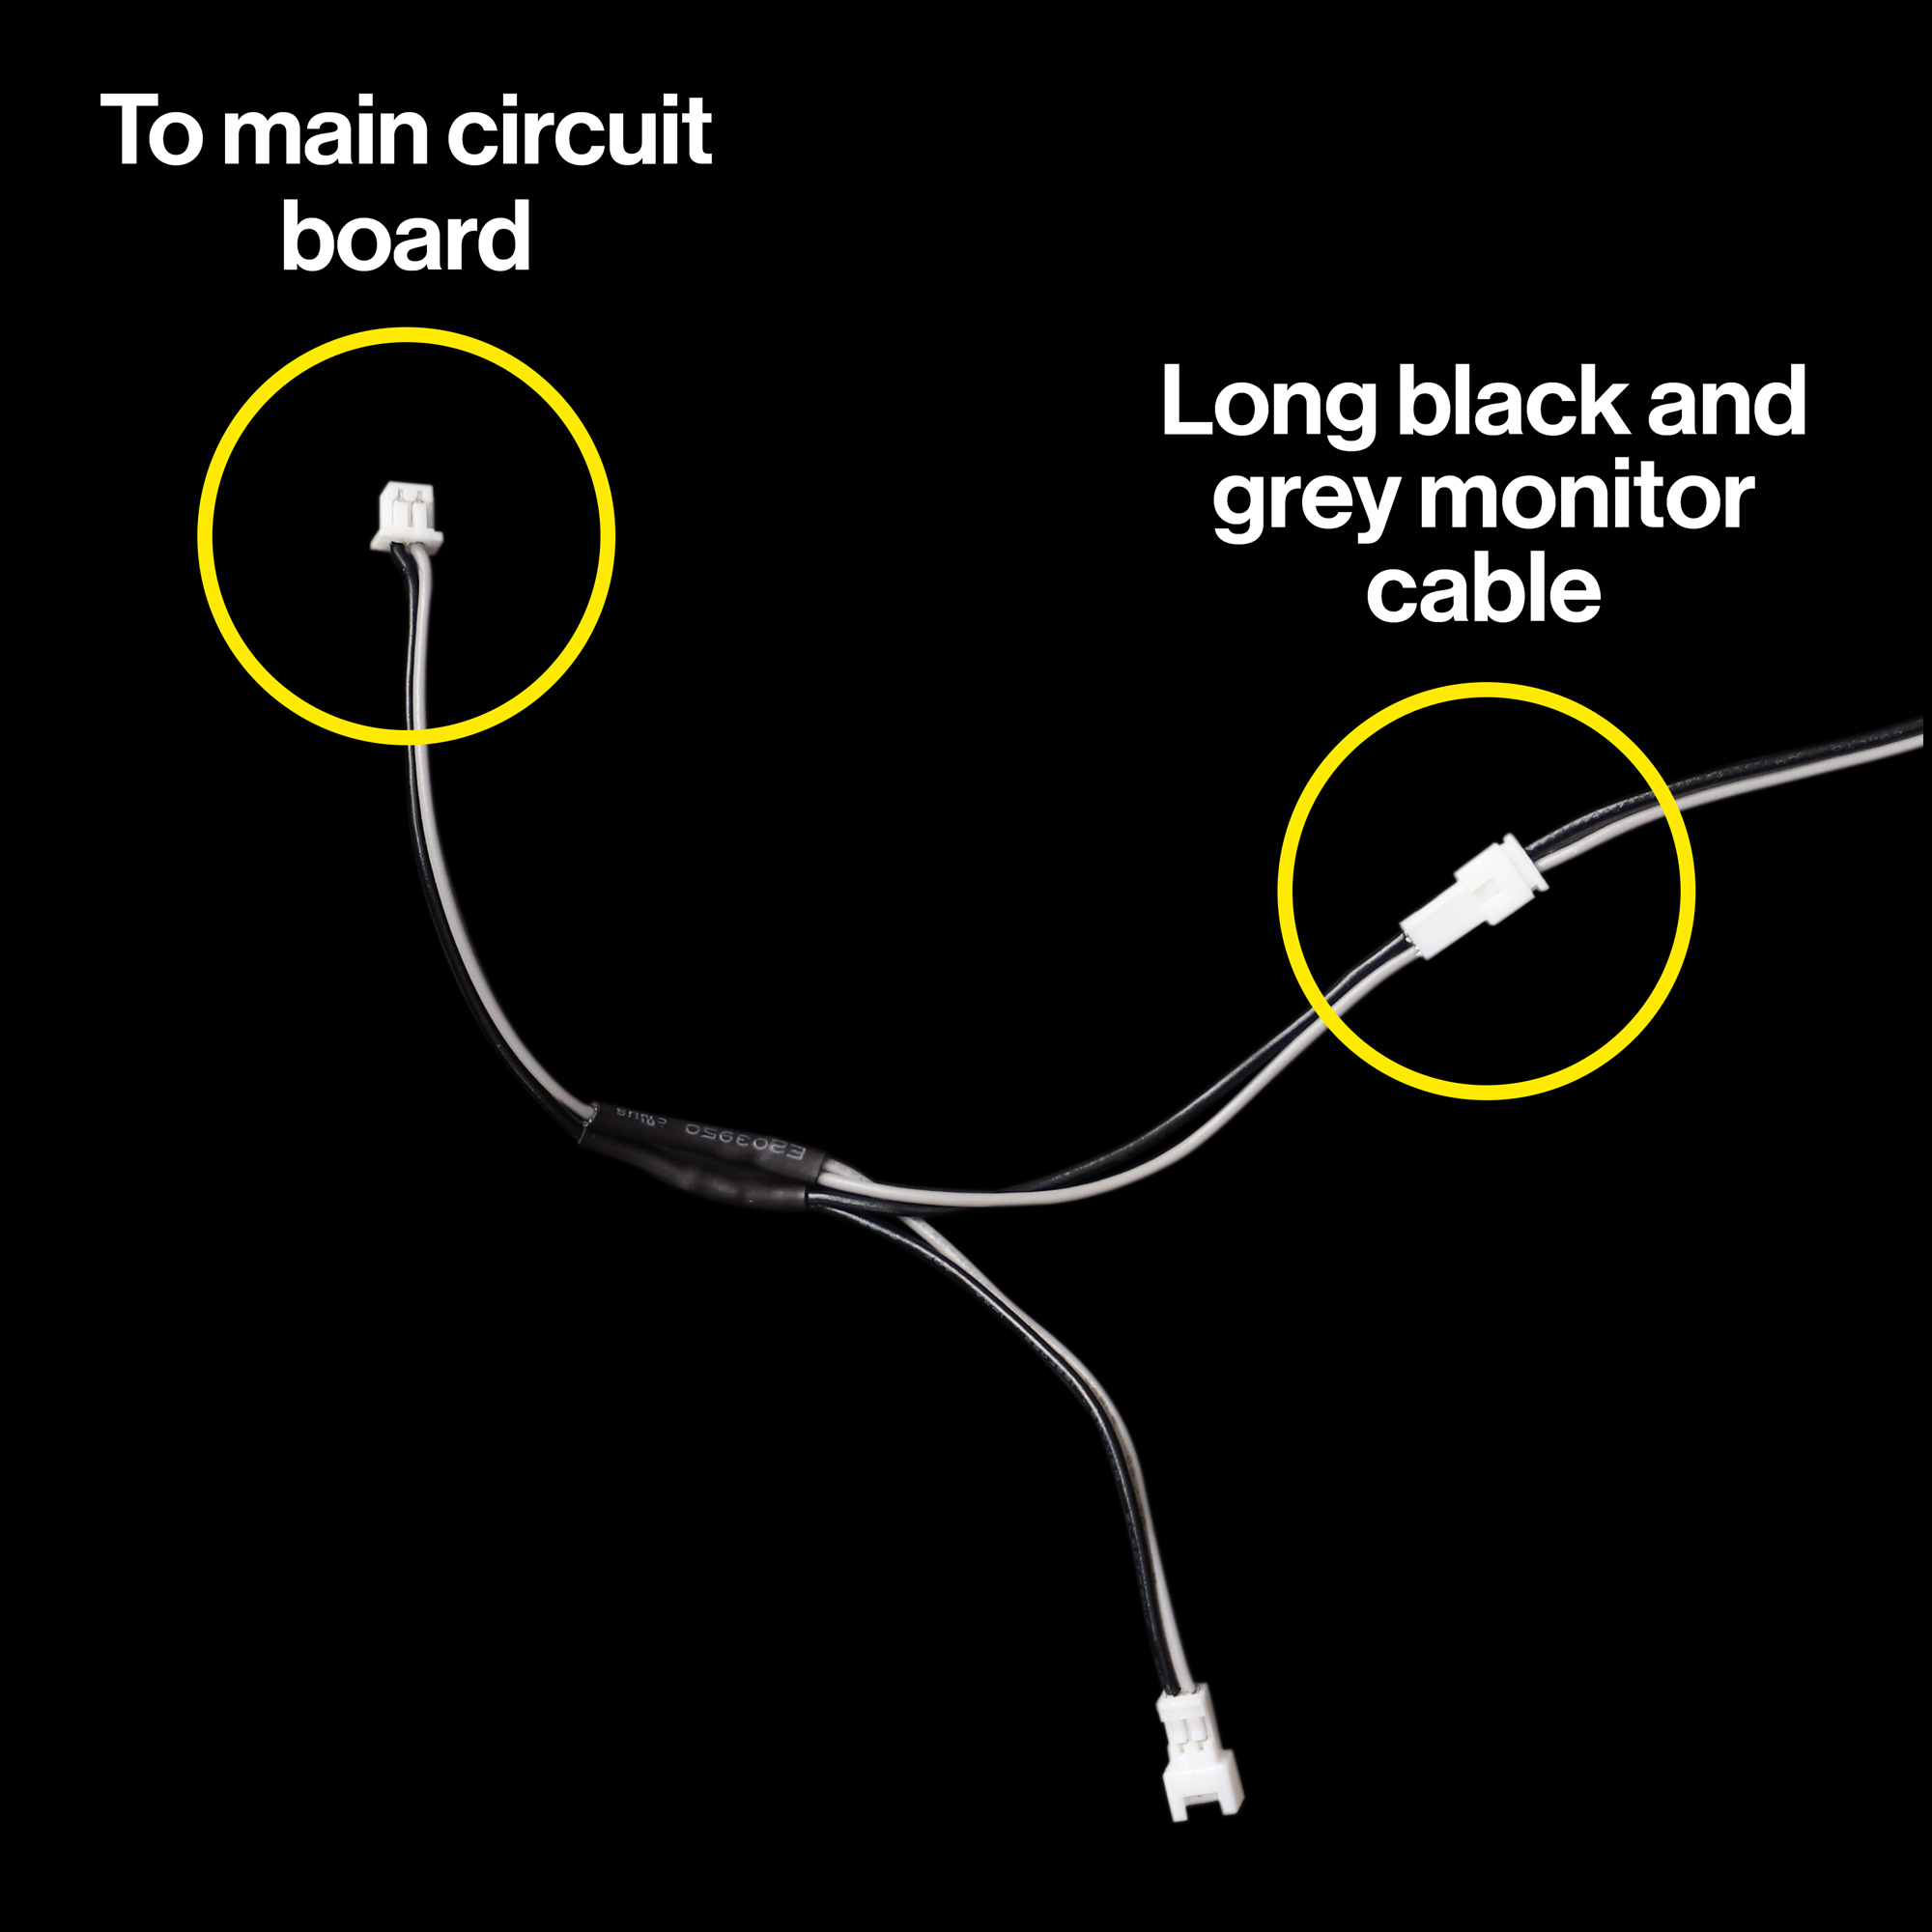 Long single black monitor cable to main circuit board